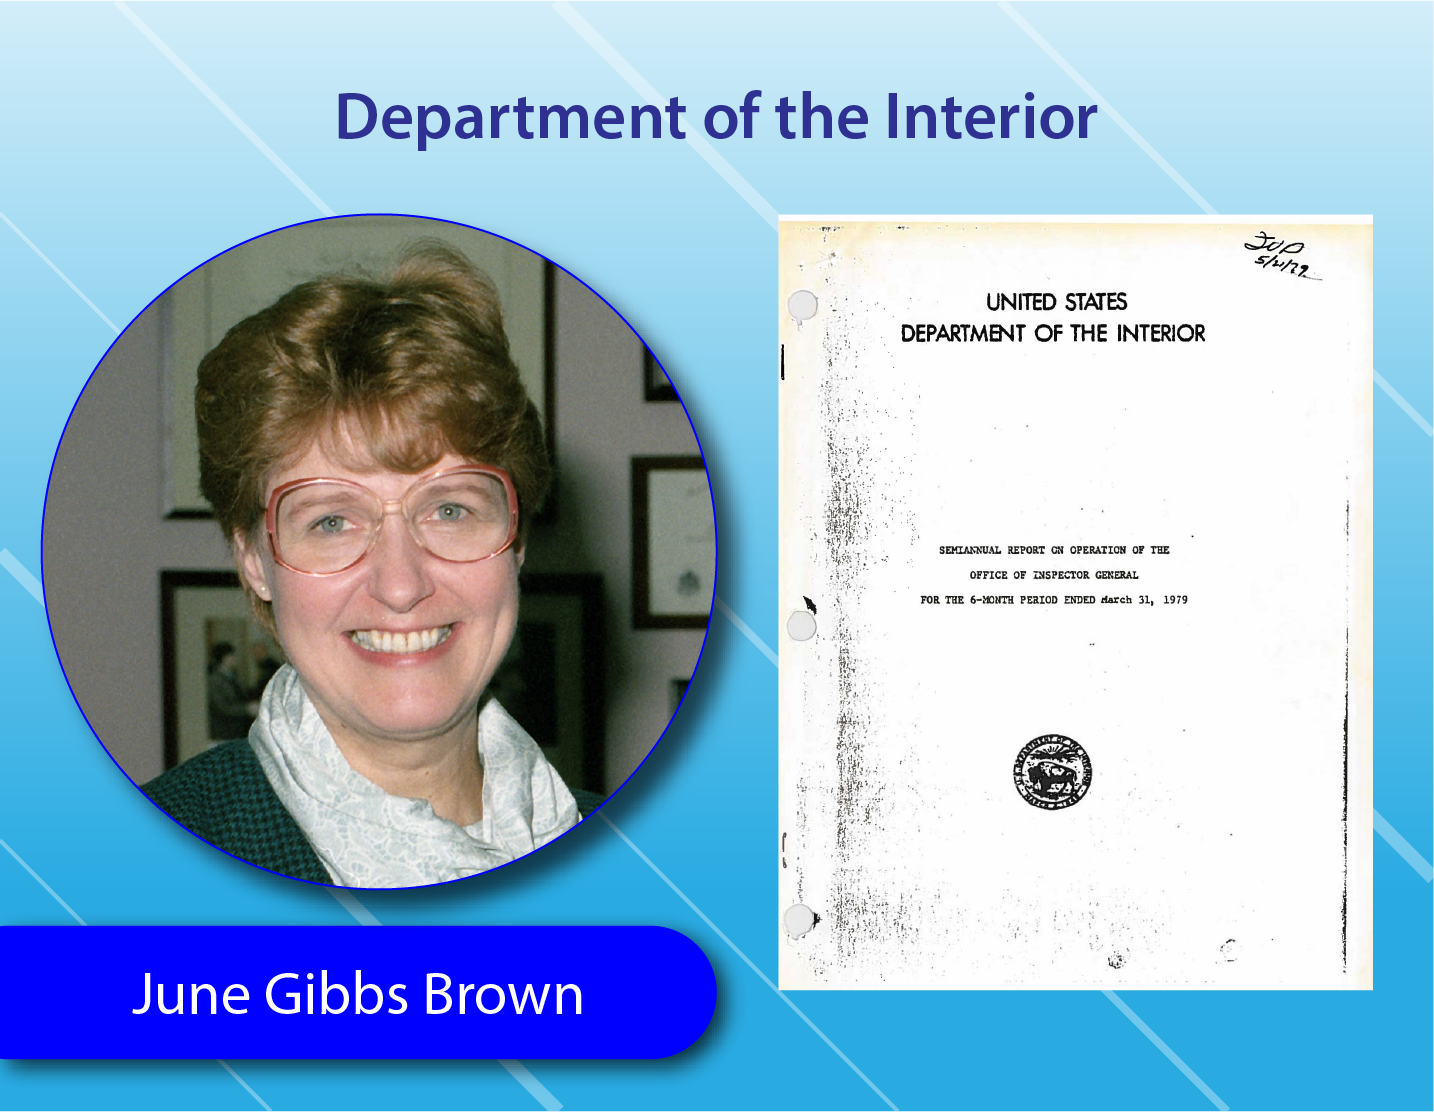 Department of Interior - June Gibbs Brown